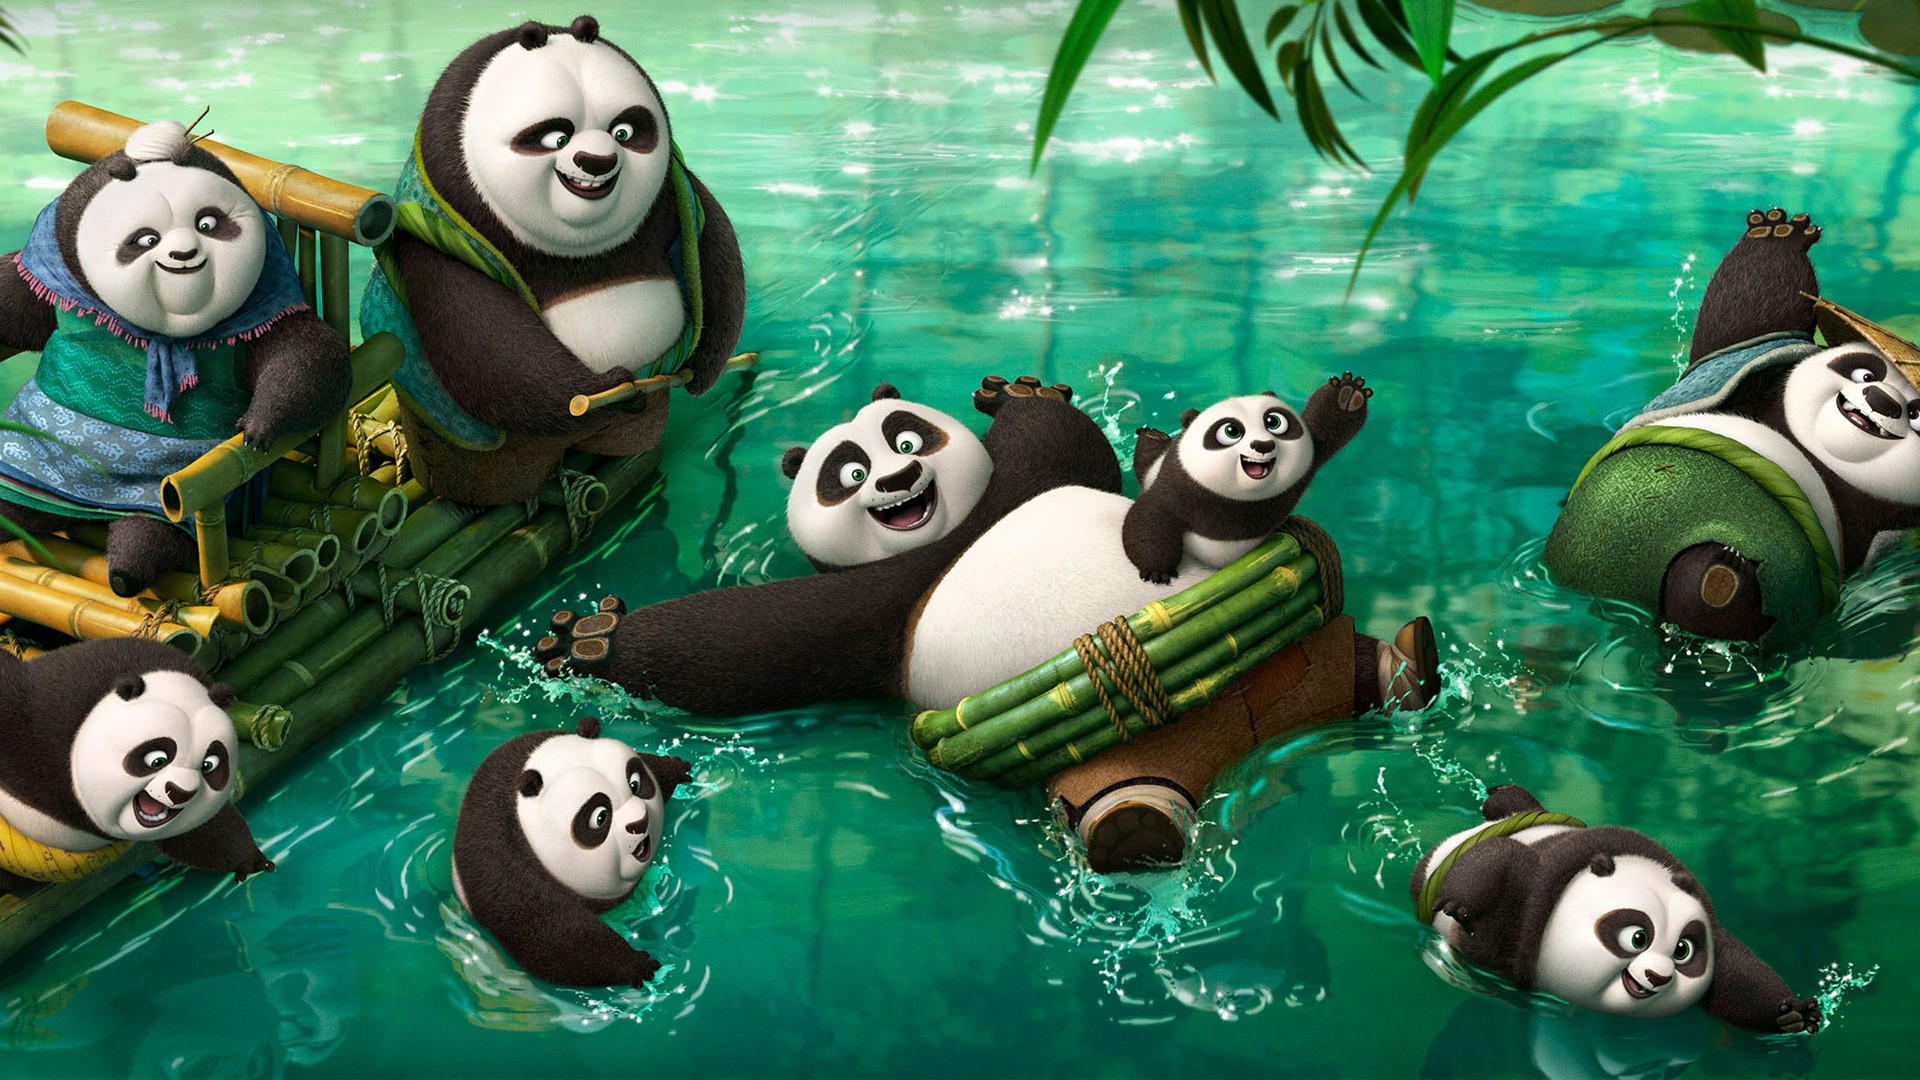 General 1920x1080 panda Kung Fu Panda movies animated movies